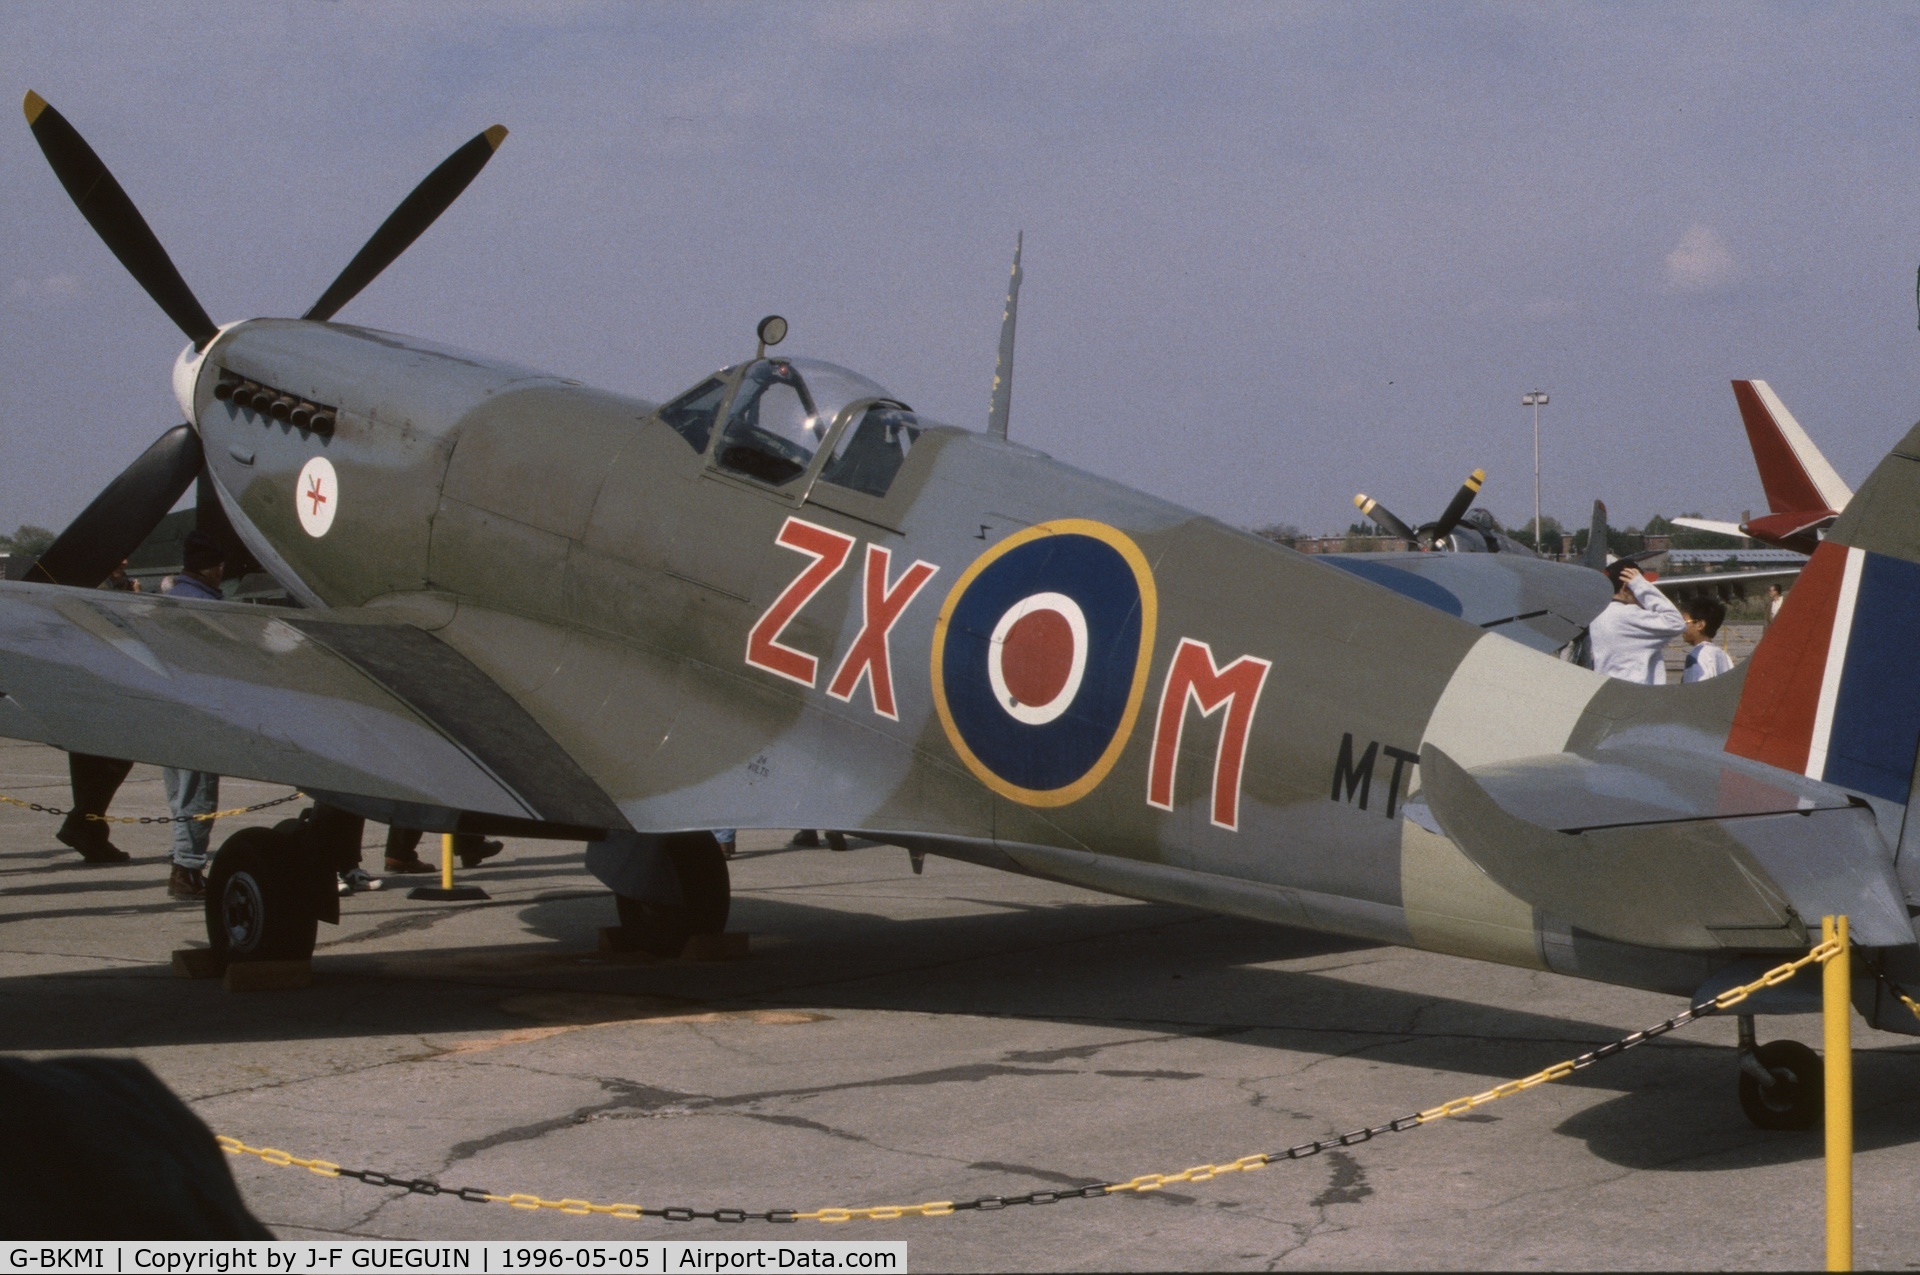 G-BKMI, 1944 Supermarine 359 Spitfire HF.VIIIc C/N 6S/583793, On display at Paris-Le Bourget Airport (Salon des Avions de Légende, 1996), painted in RAF 145 squadron markings.